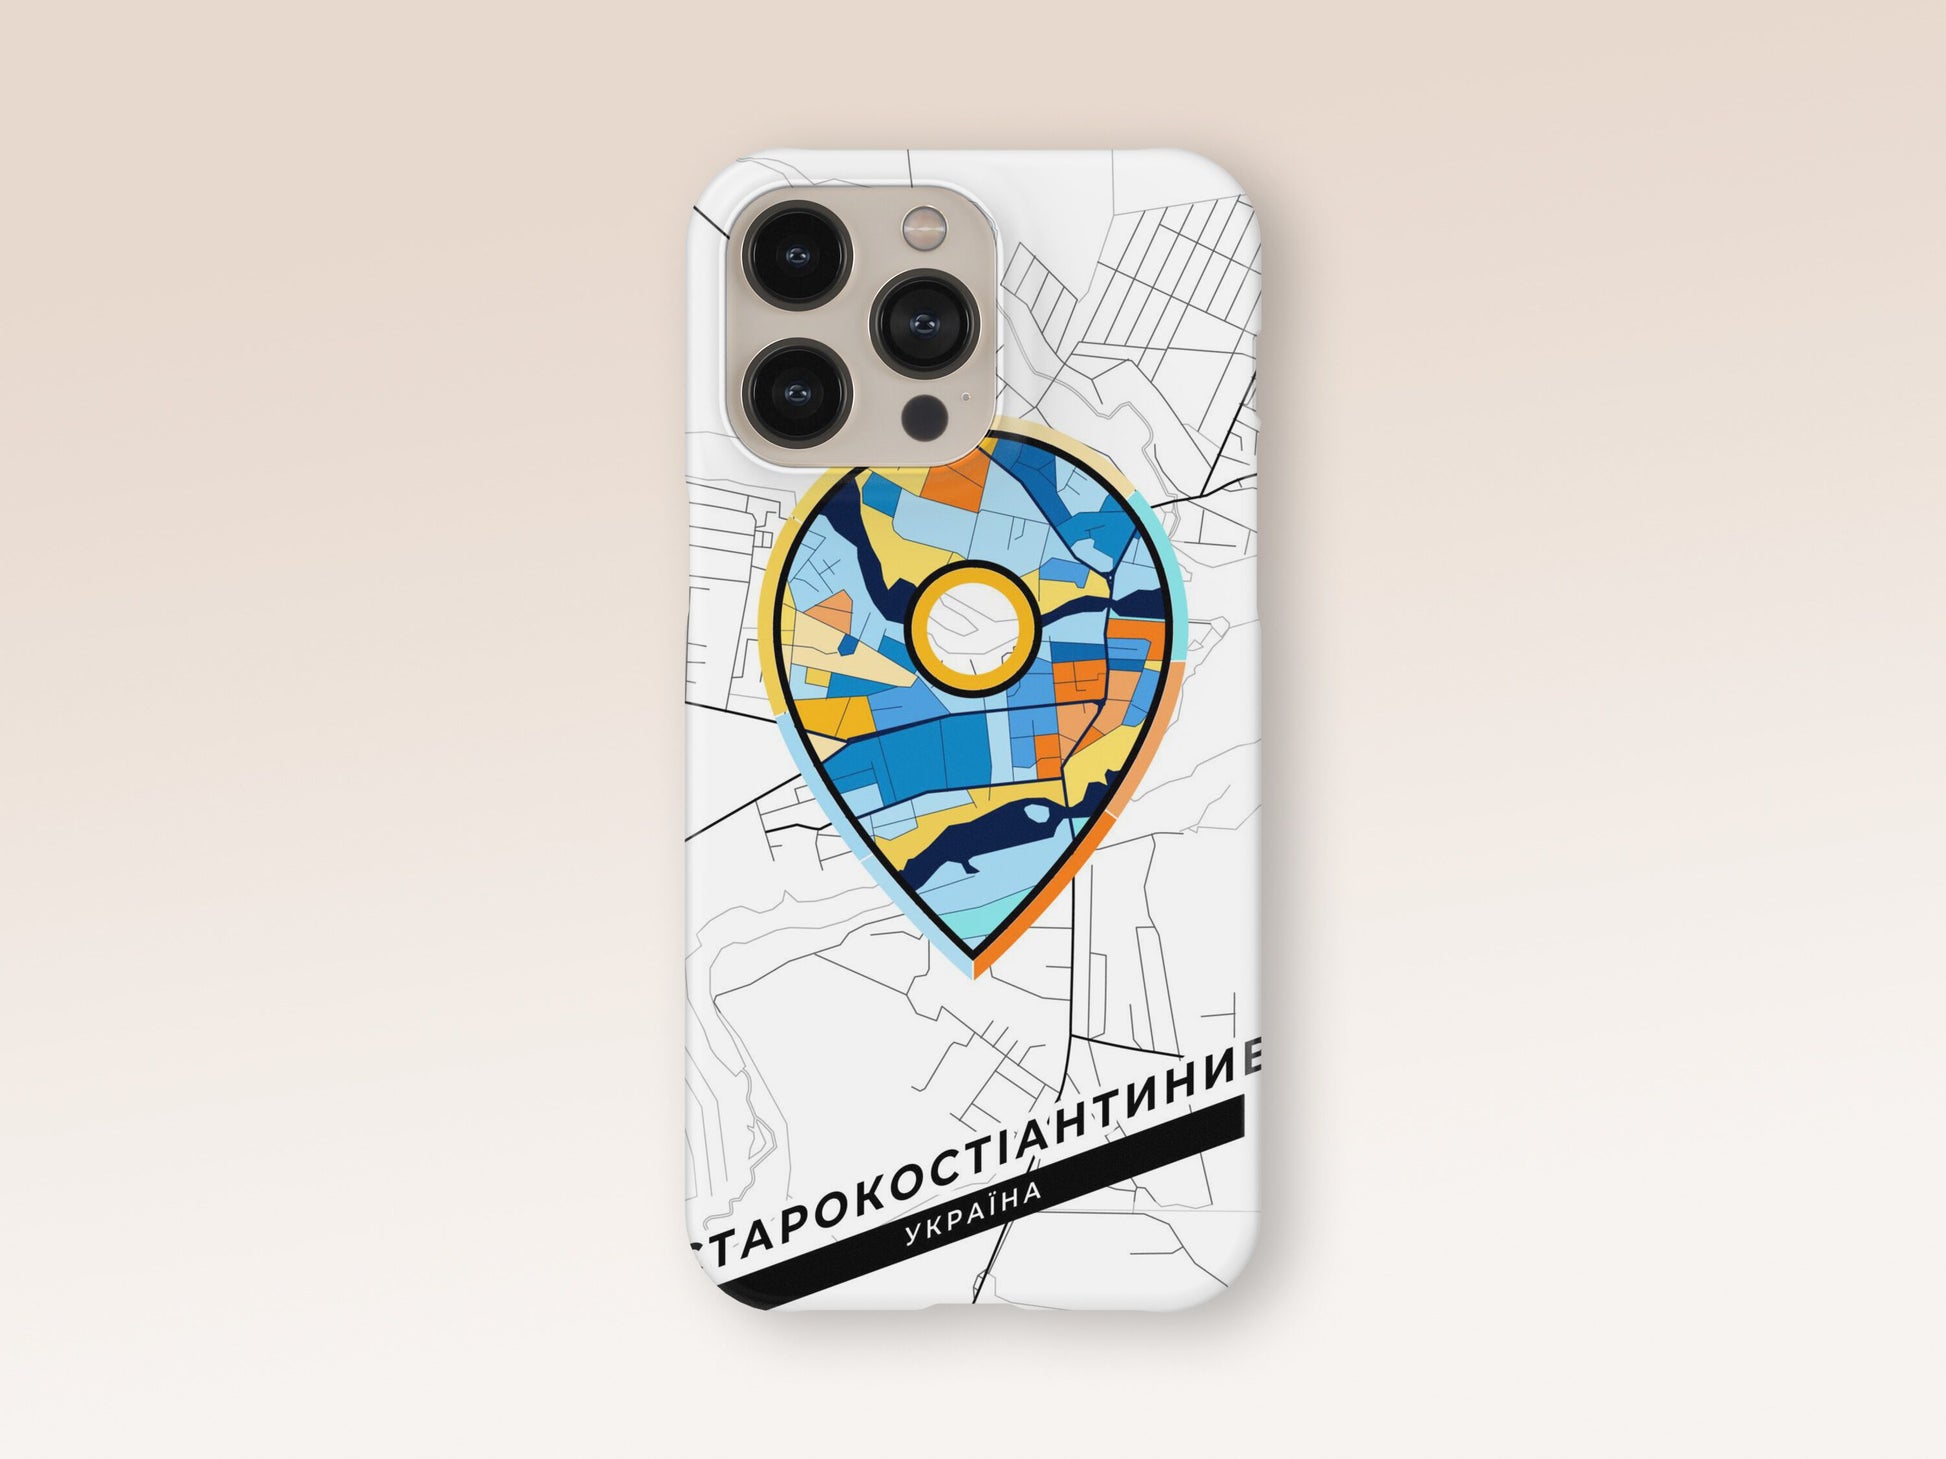 Starokostiantyniv Ukraine slim phone case with colorful icon 1